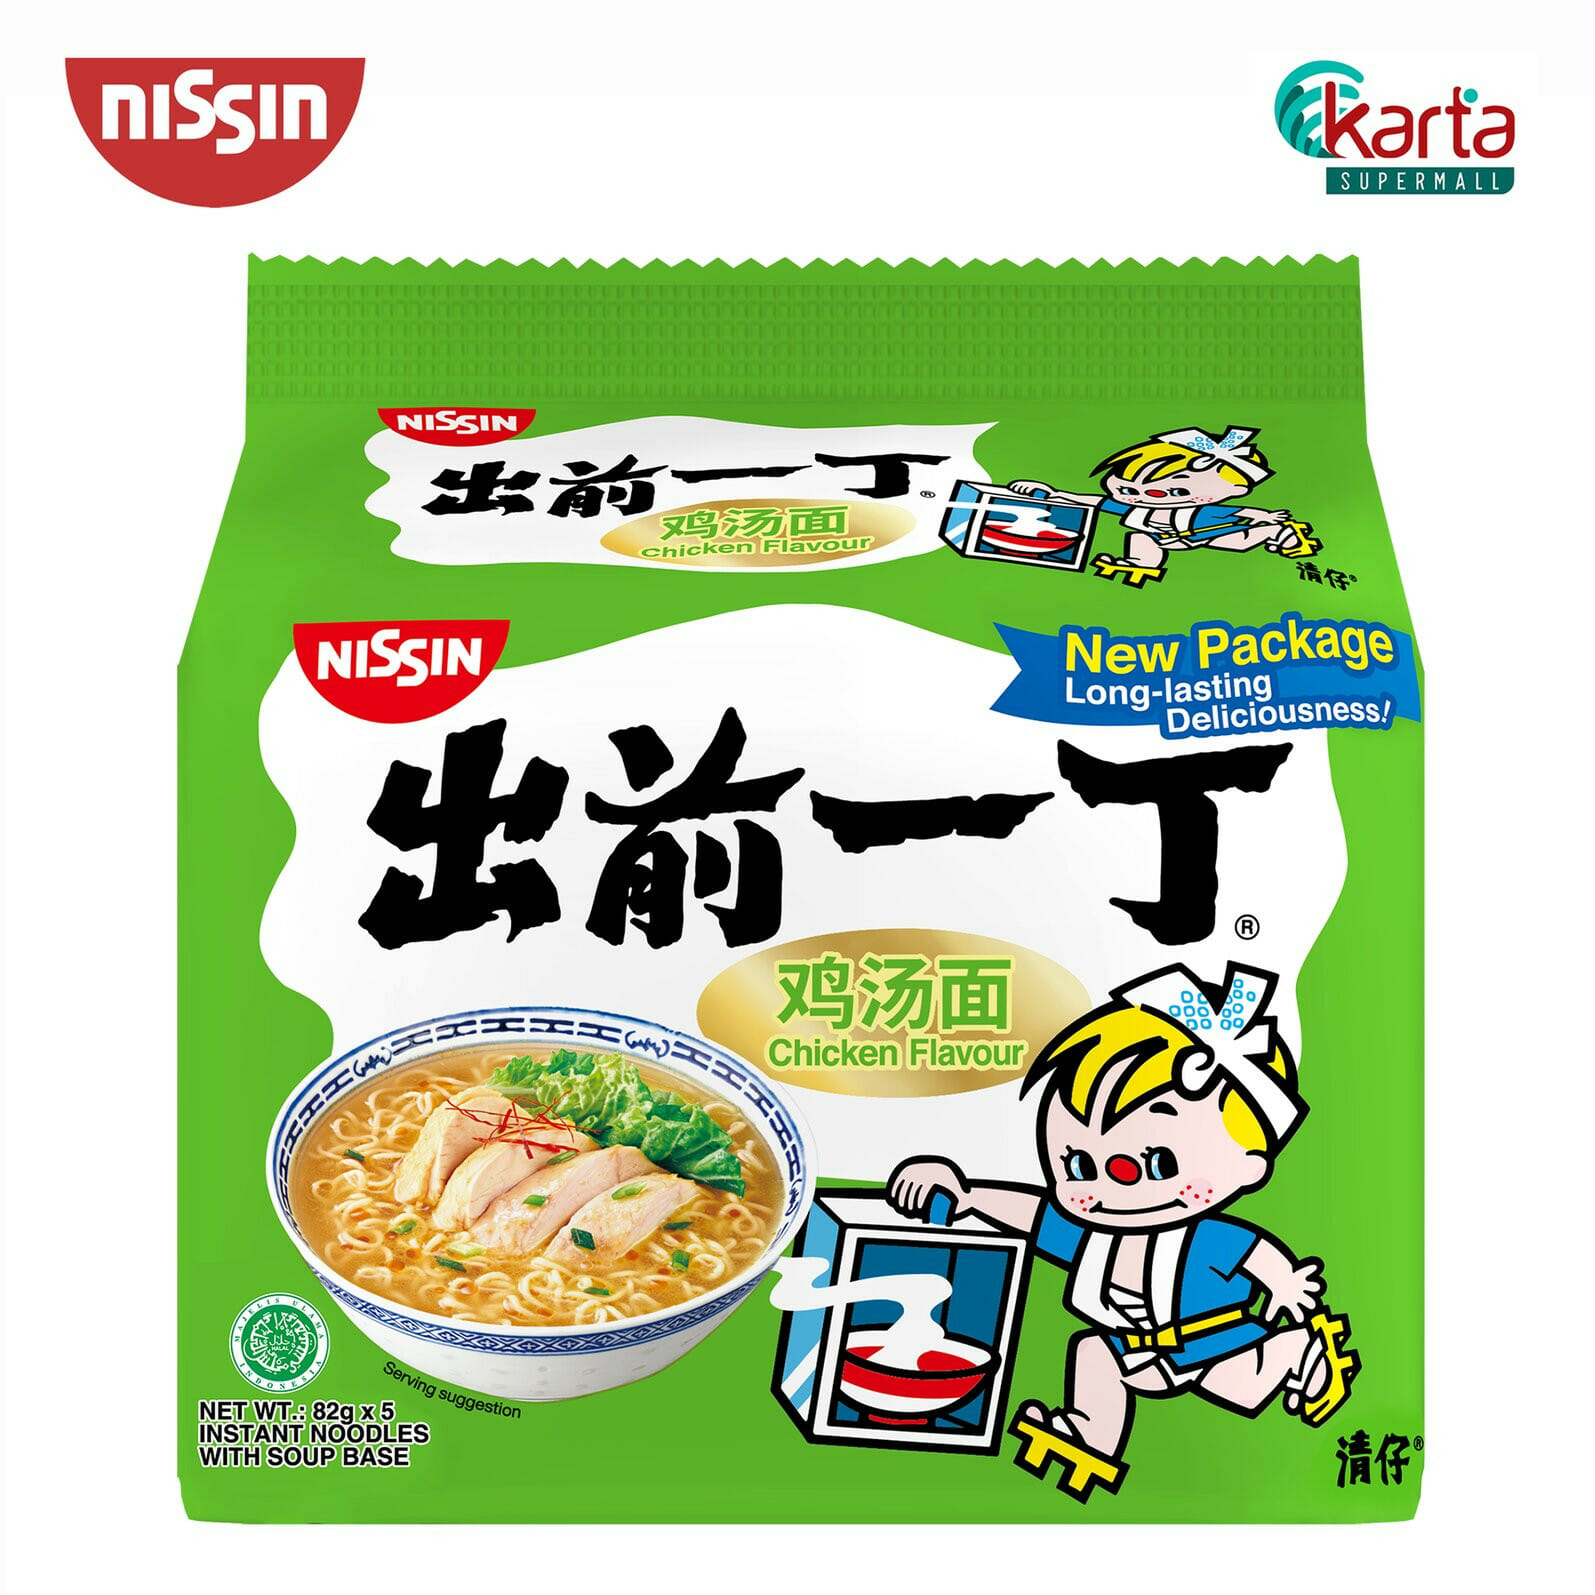 Delicious Nissin Ramen Enjoy The Best Of Japanese Instant Noodles Worldwide